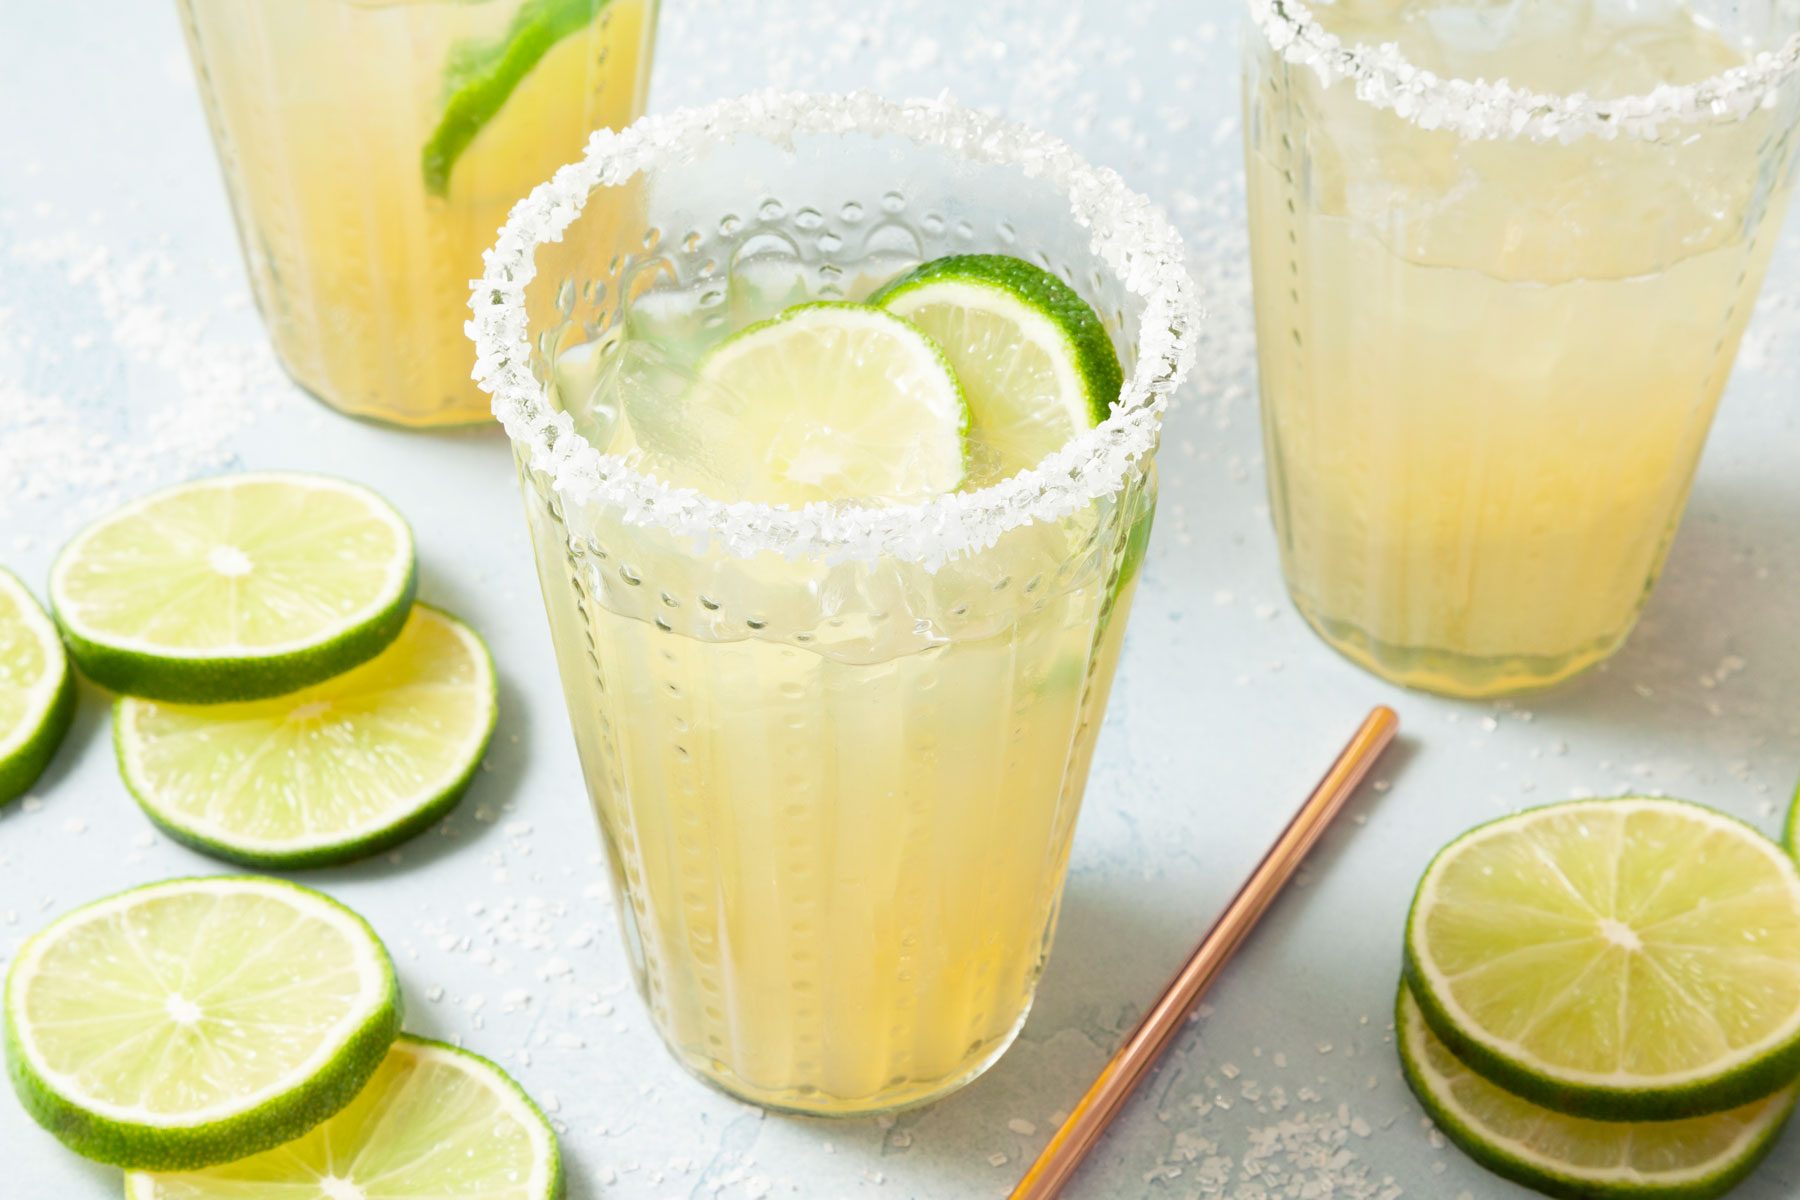 Cups of Refreshing Beer Margaritas with slices of lemon on side